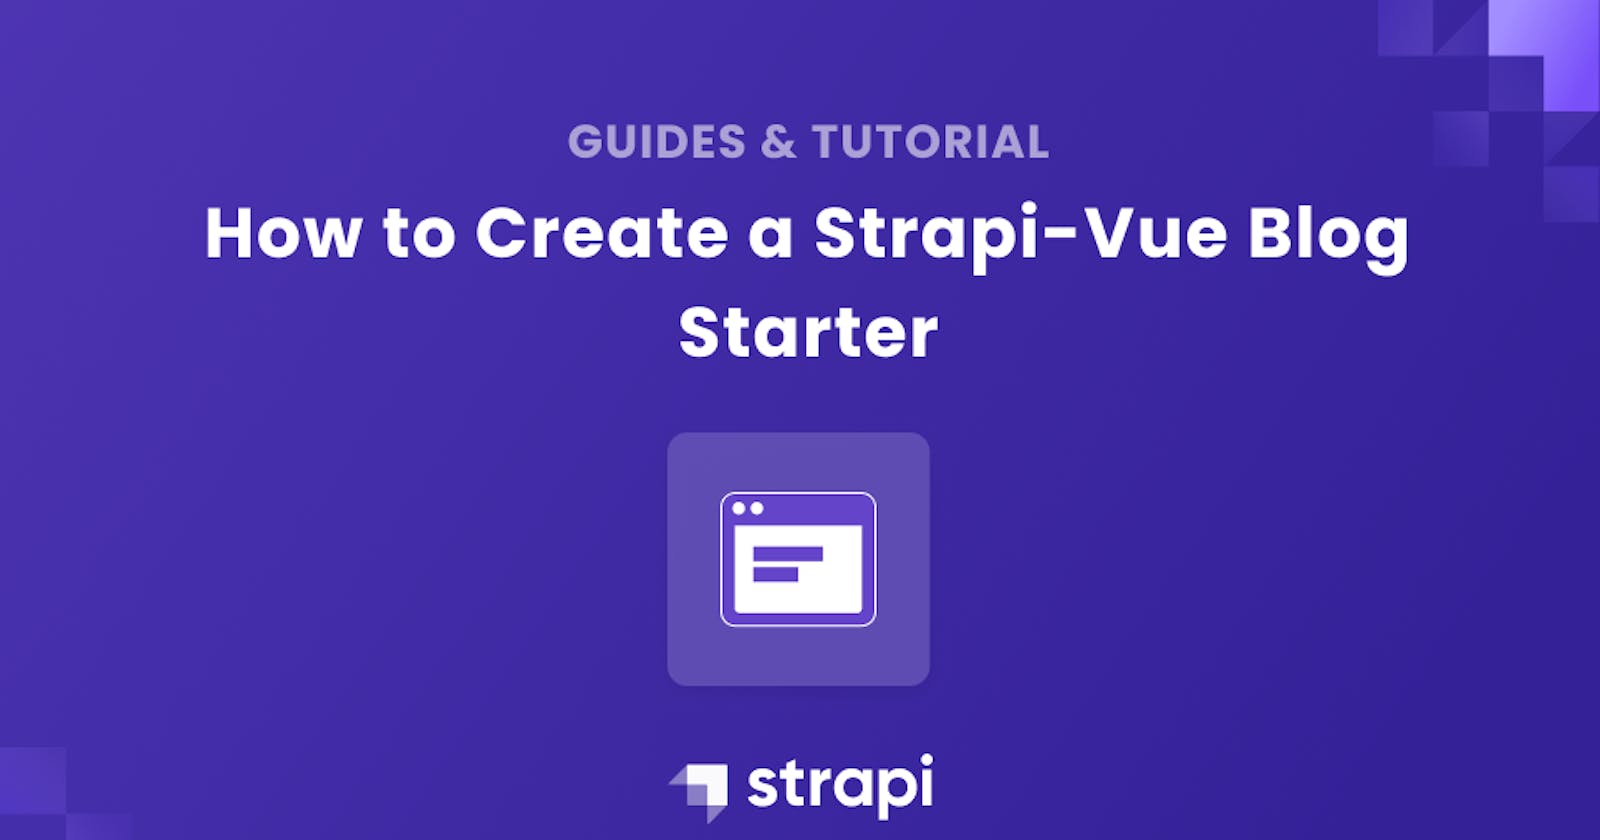 How to create a Strapi-Vue Blog Starter